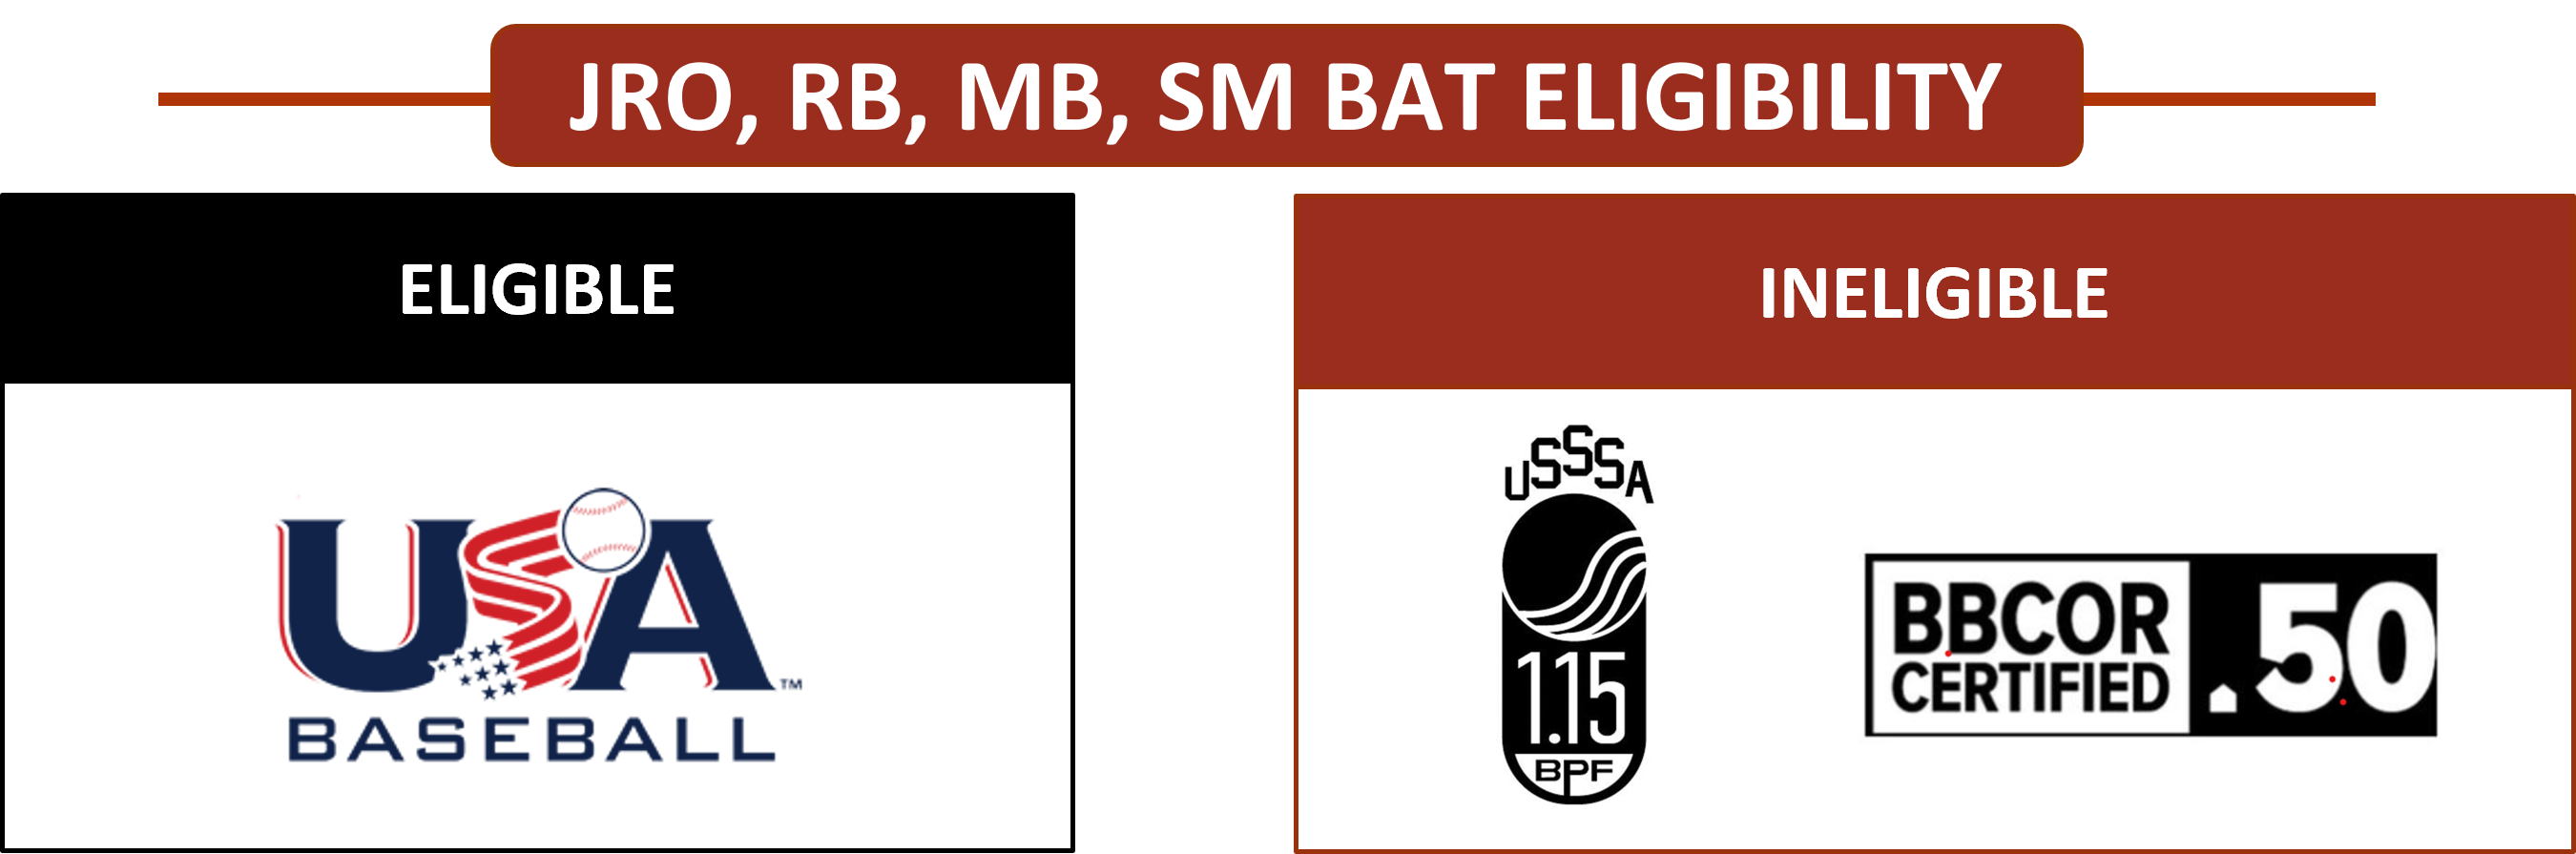 JRO-RB-MB-SM Bat Eligibility_Final